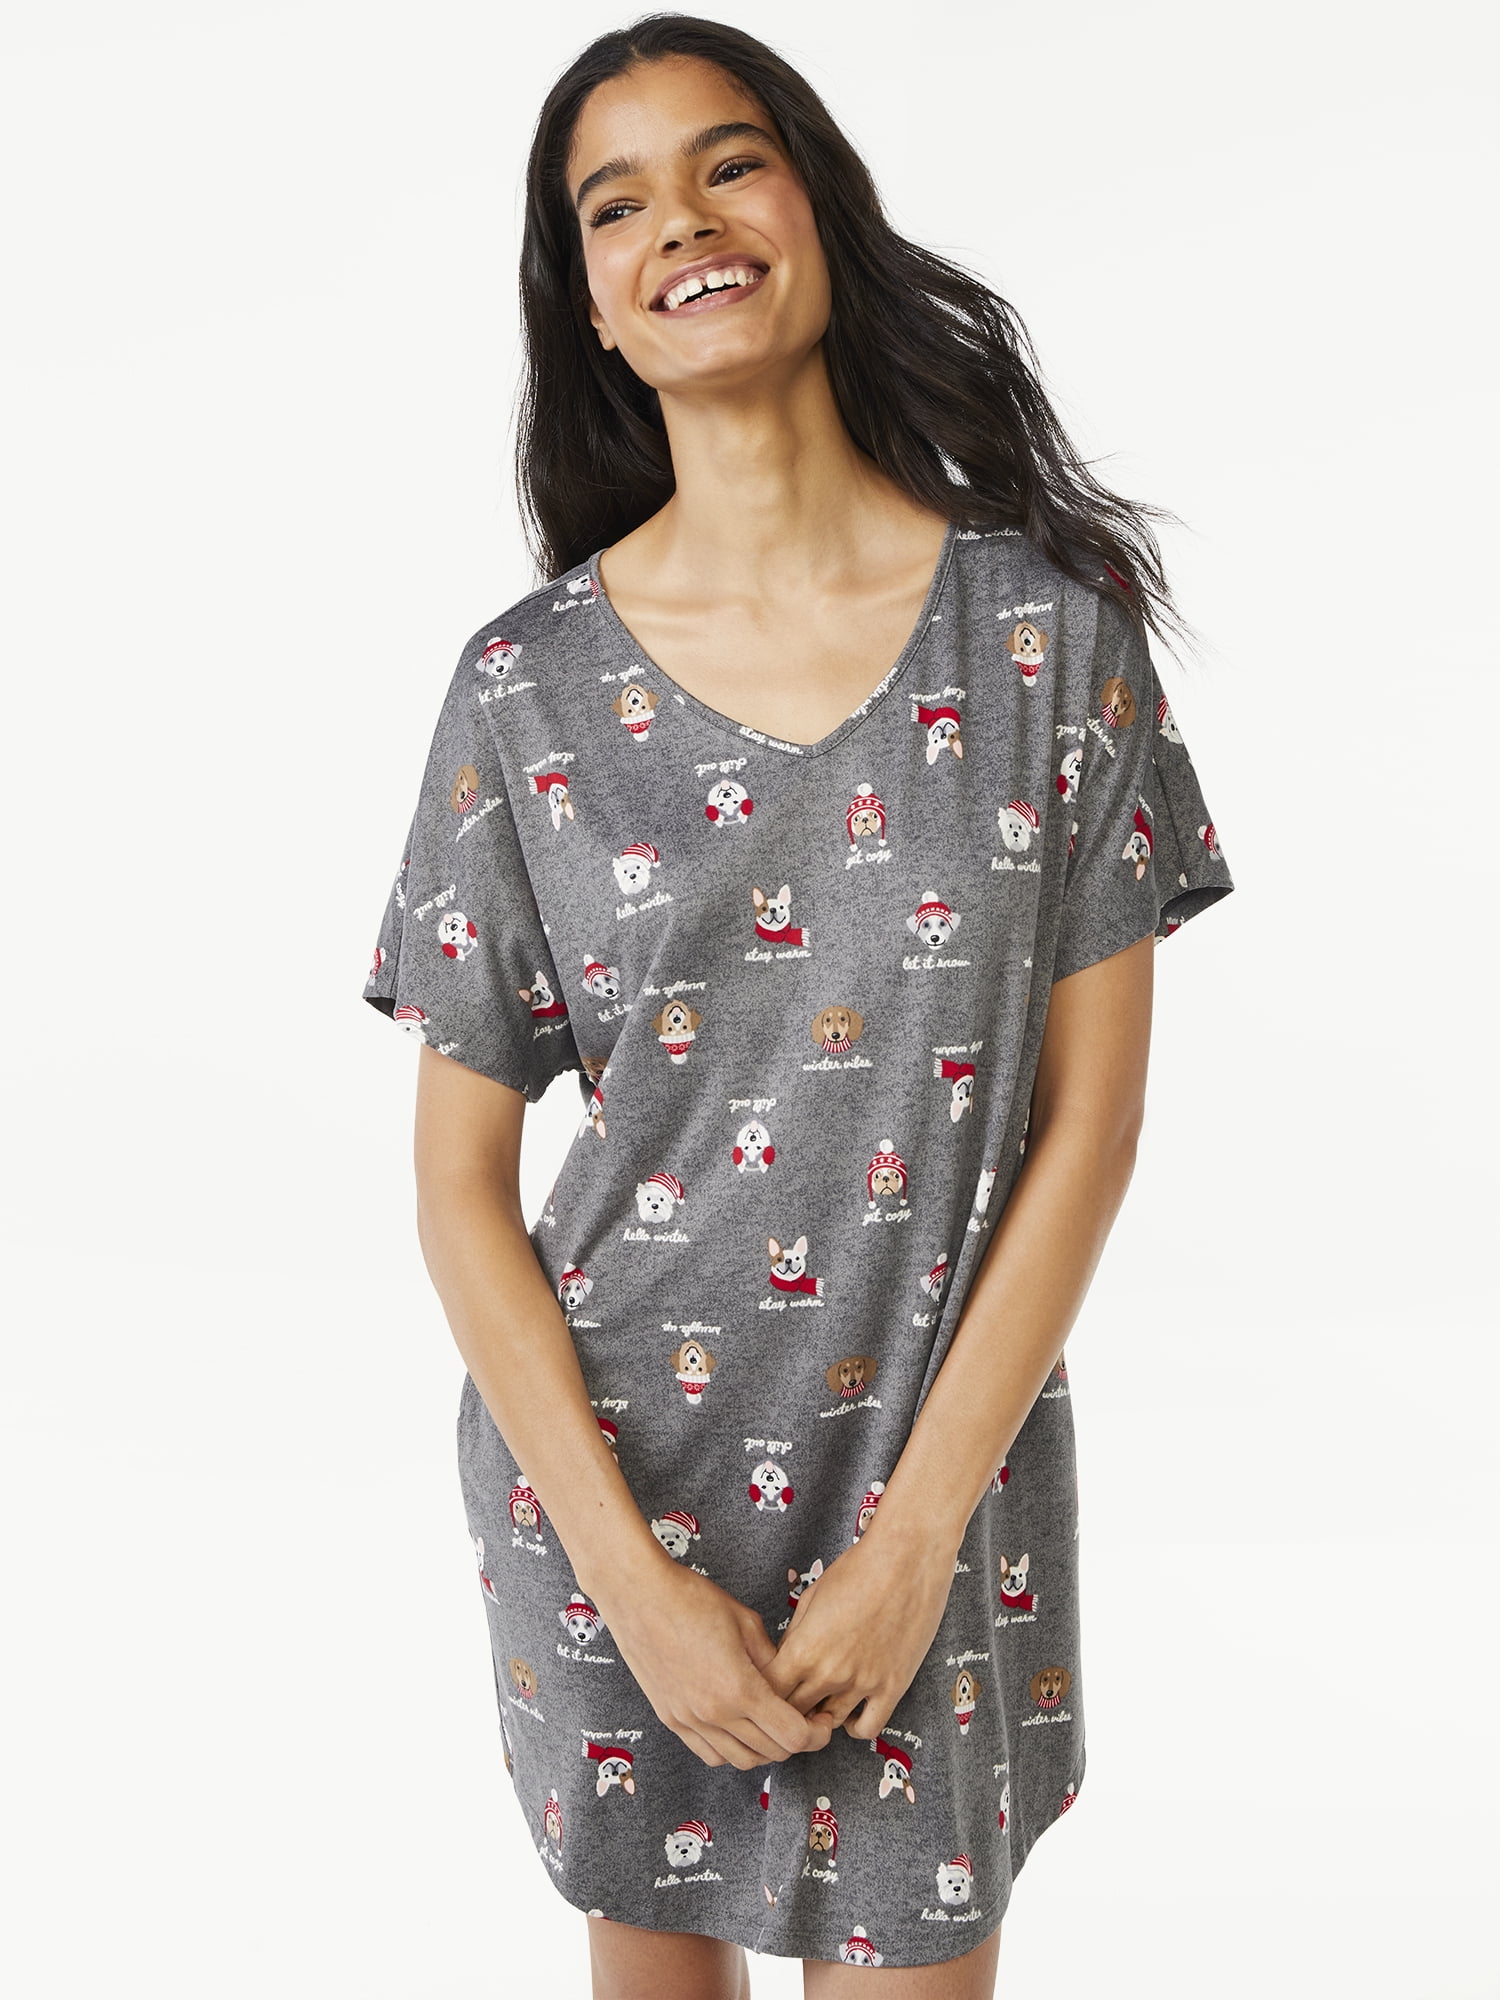 Joyspun Women's Short Sleeve Sleep Shirts, 2-Pack, Sizes S/M to 2X